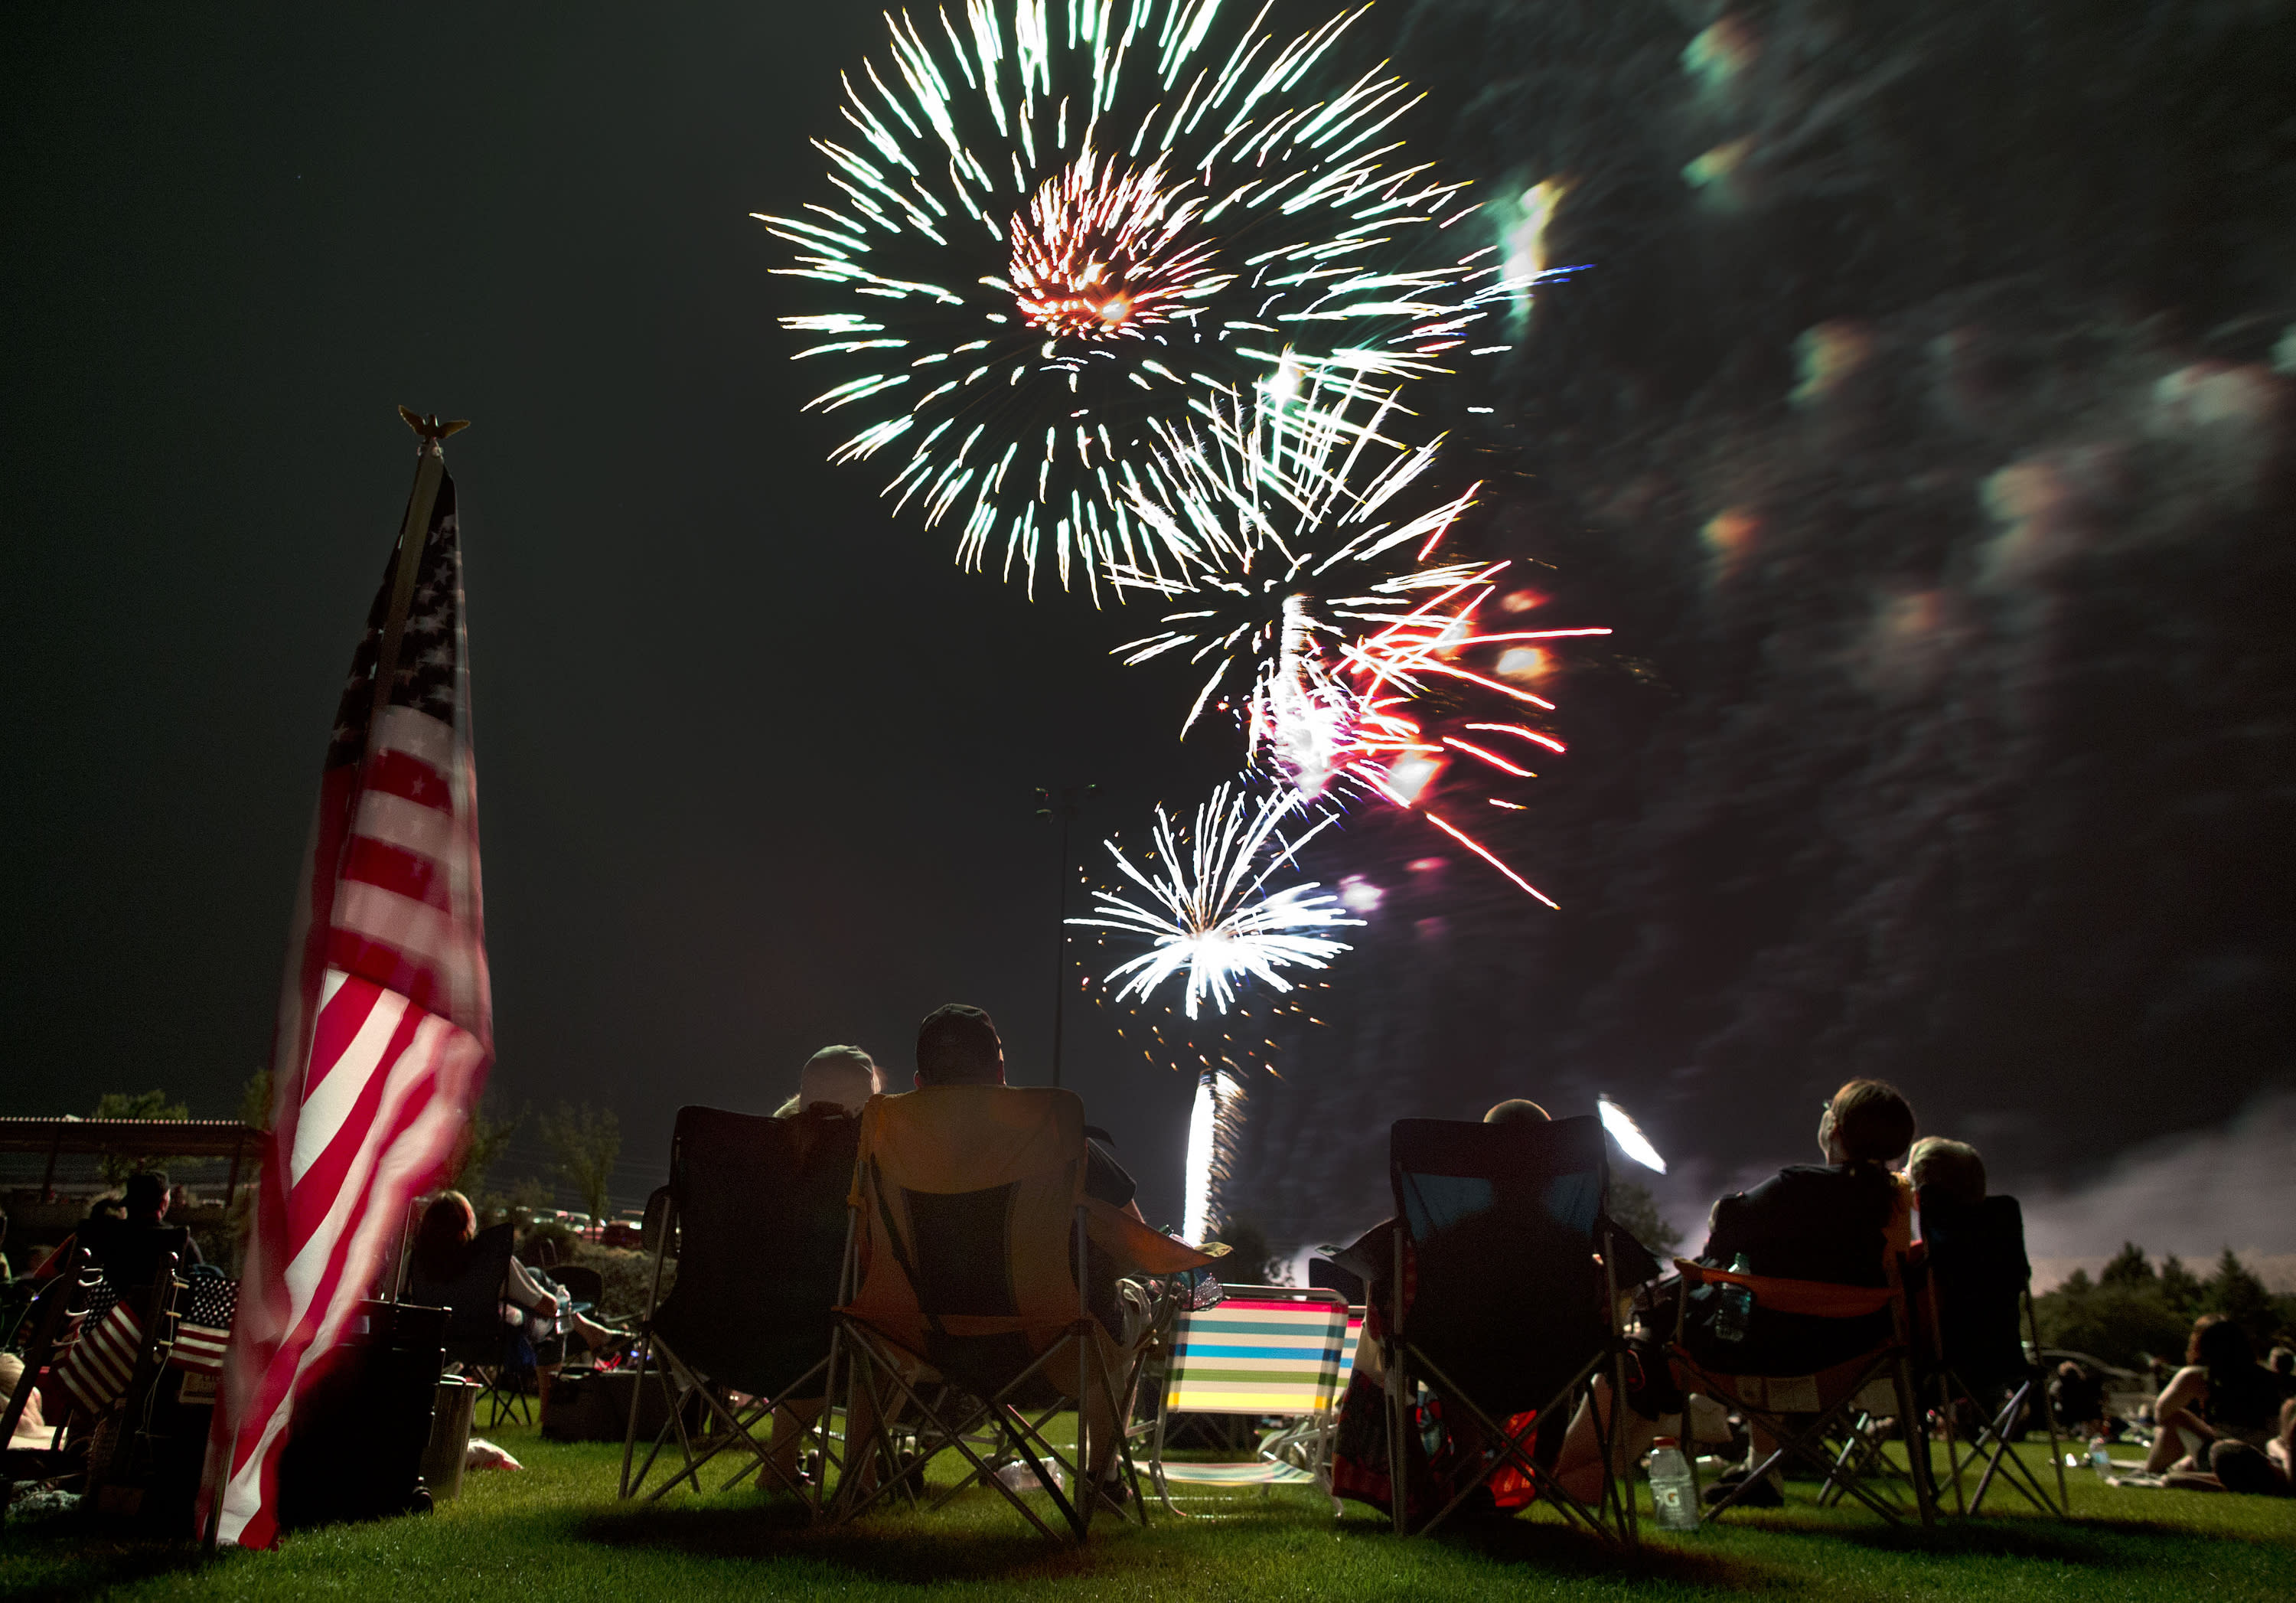 More fireworks in Americans' hands for July 4 raises risks